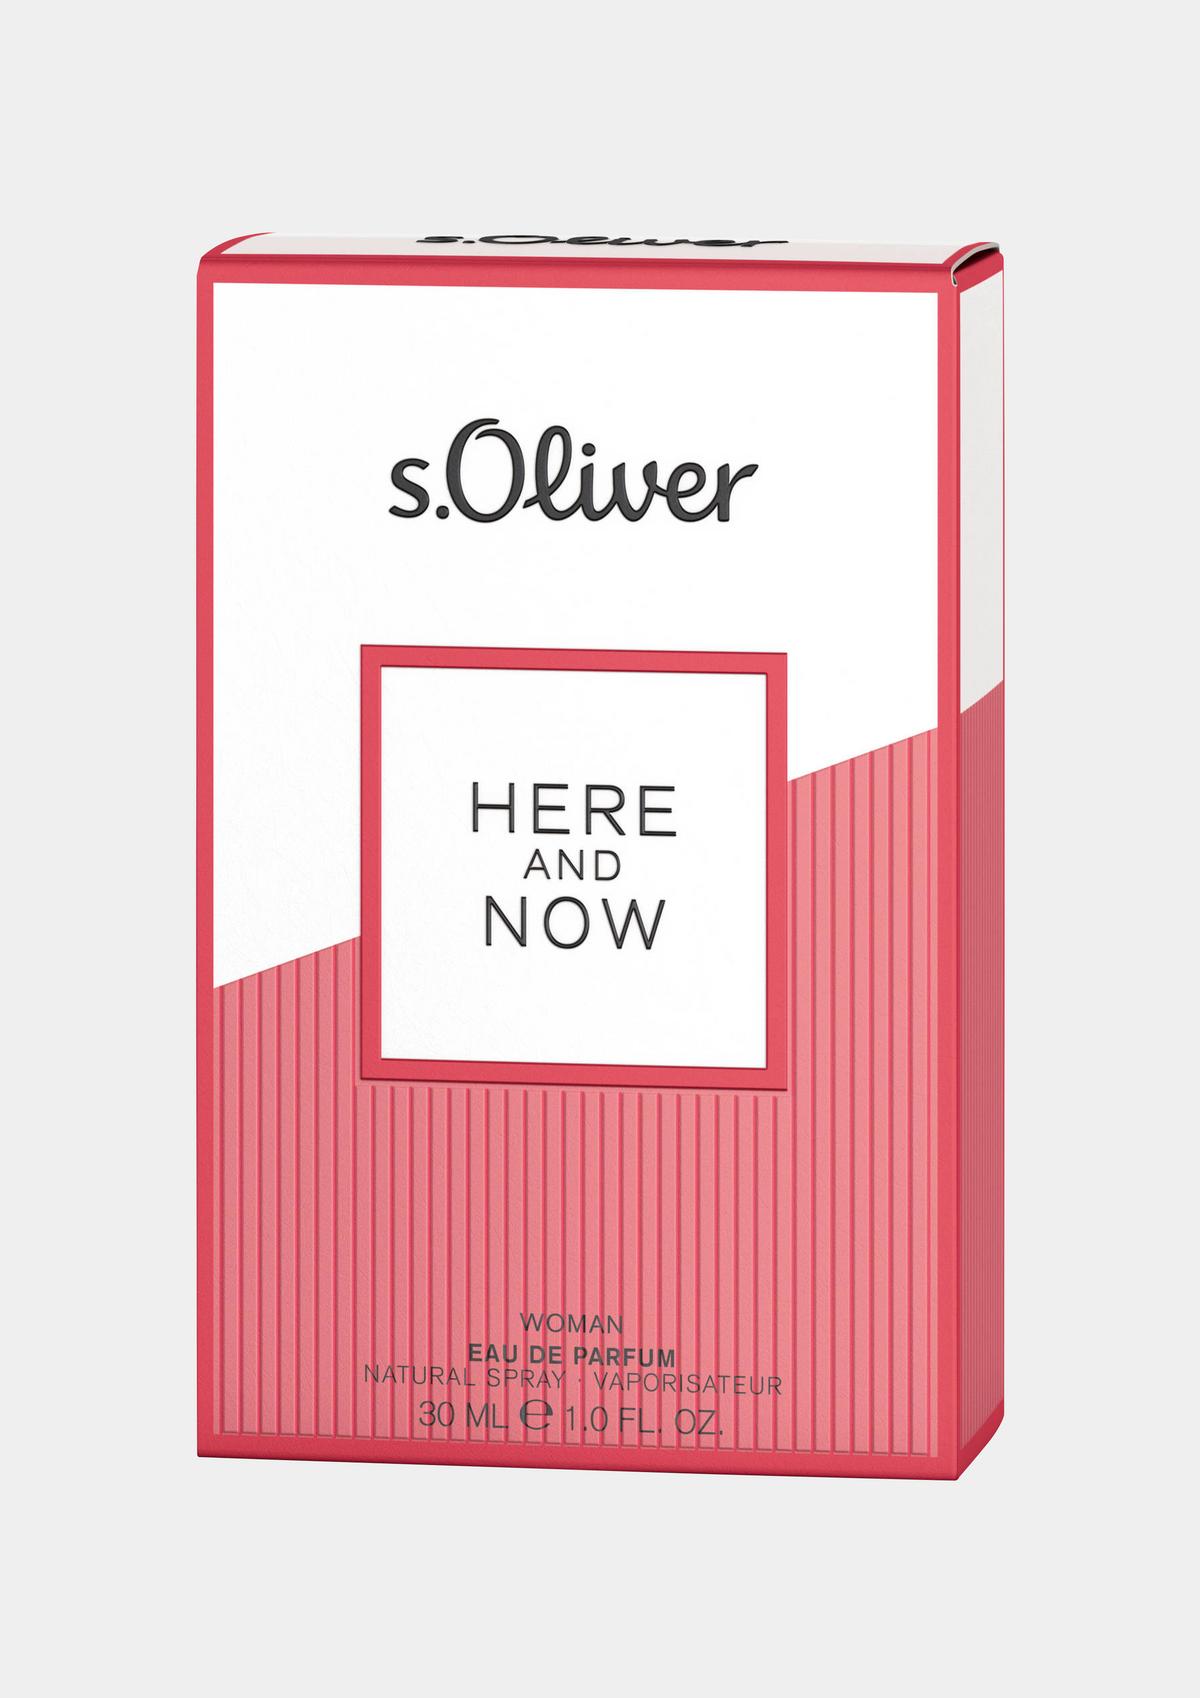 s.Oliver Eau de Toilette Here And Now 30 ml